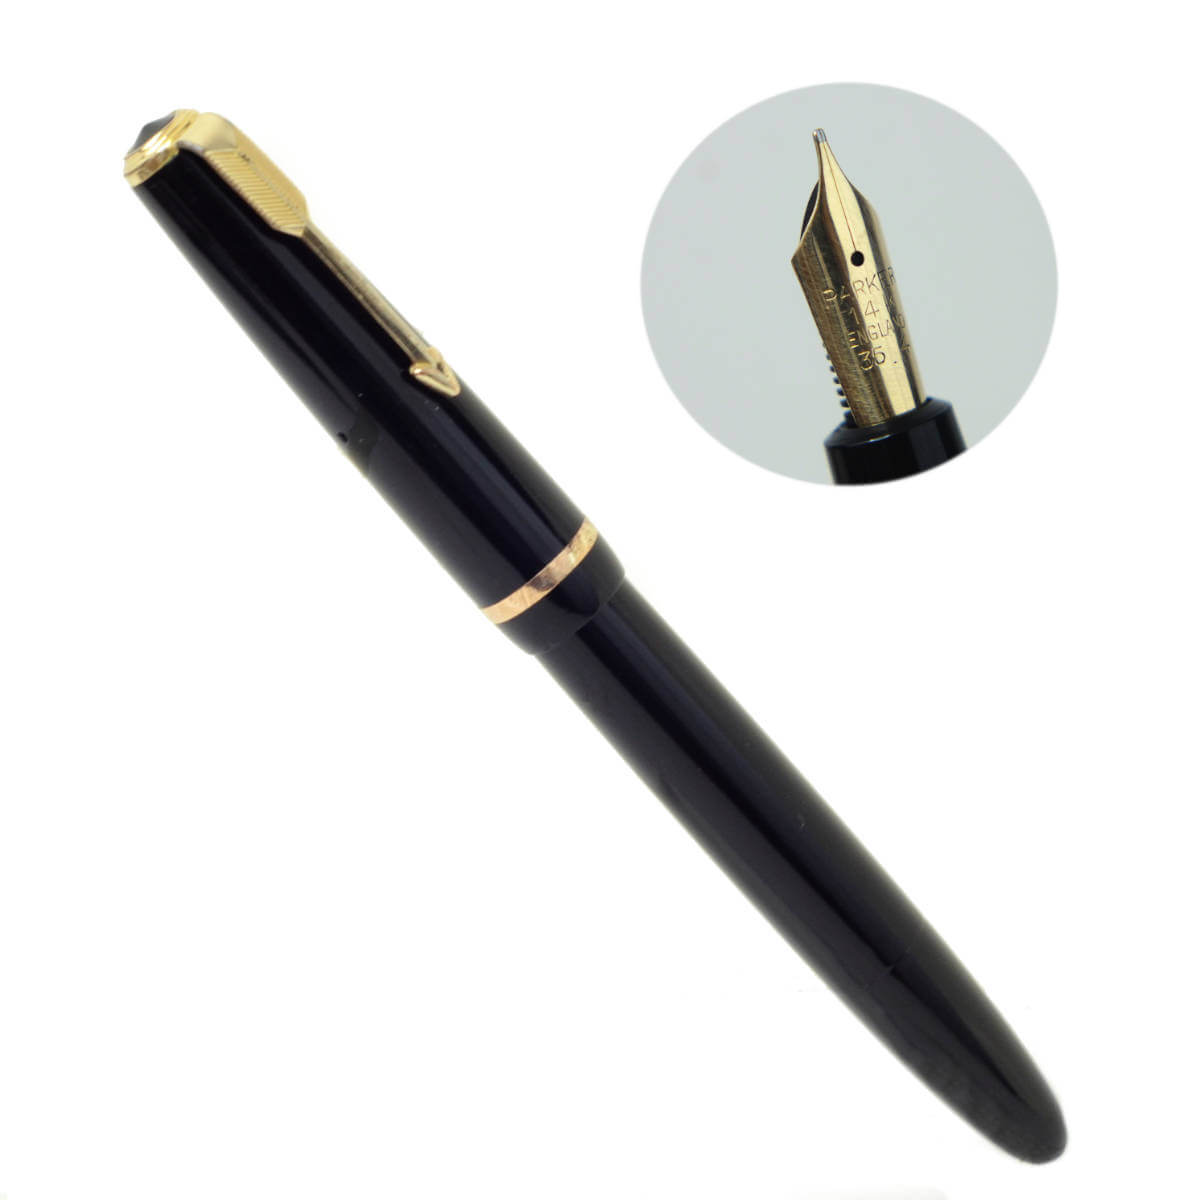 Vintage parker duofold senior black fountain pen – 14 Karat gold M nib – Clean